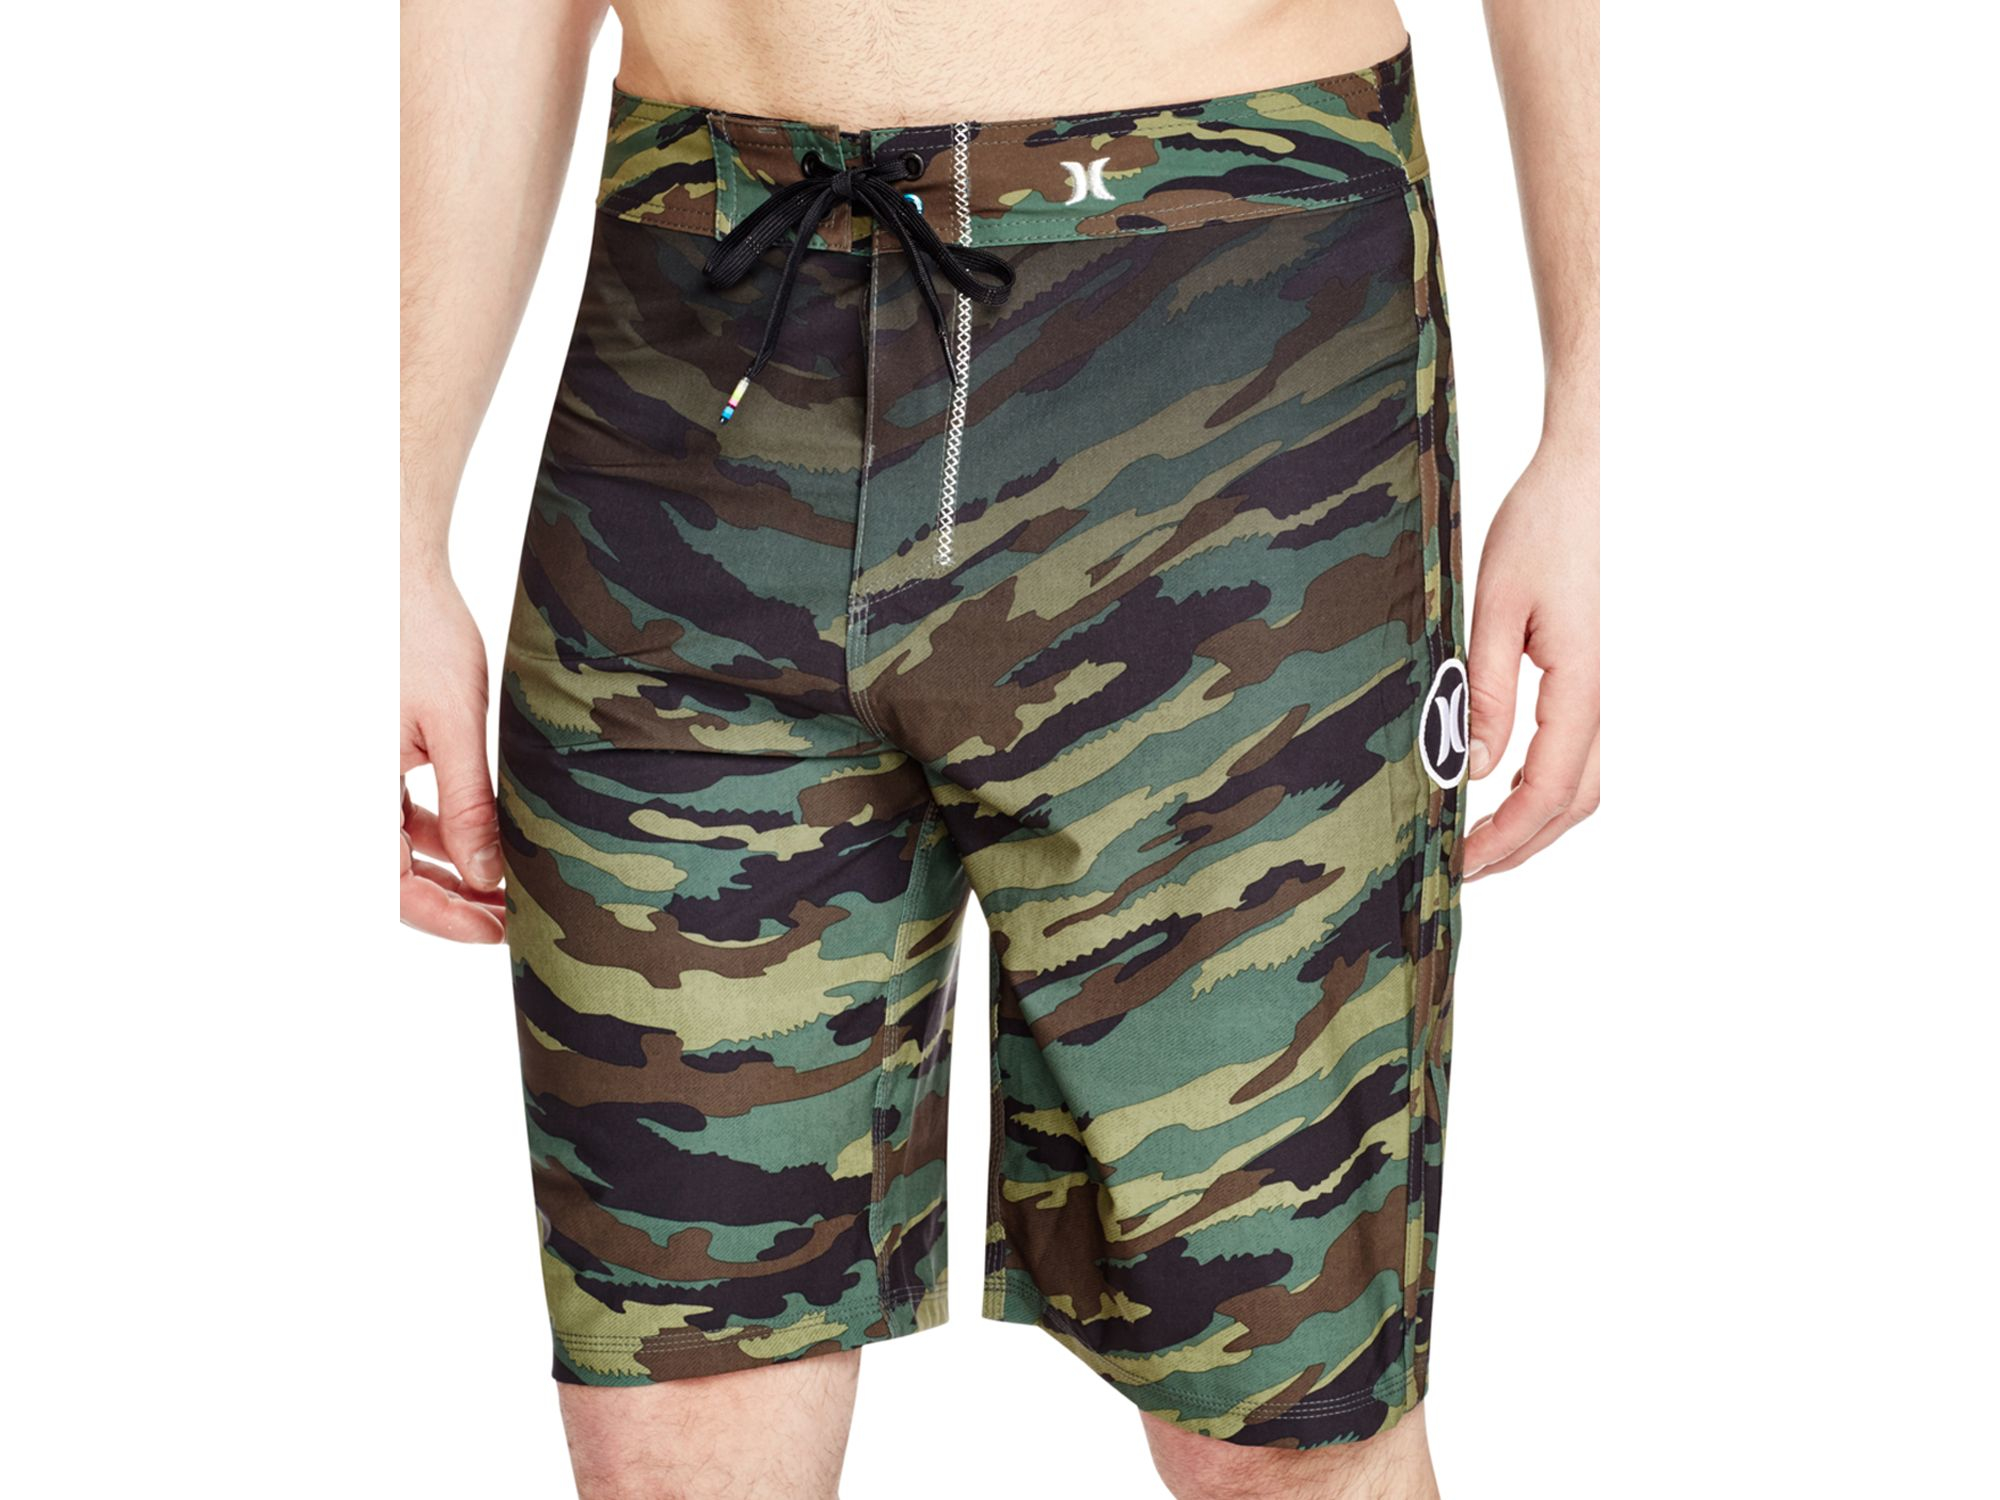 Lyst - Hurley Phantom Camouflage Board Shorts in Green for Men